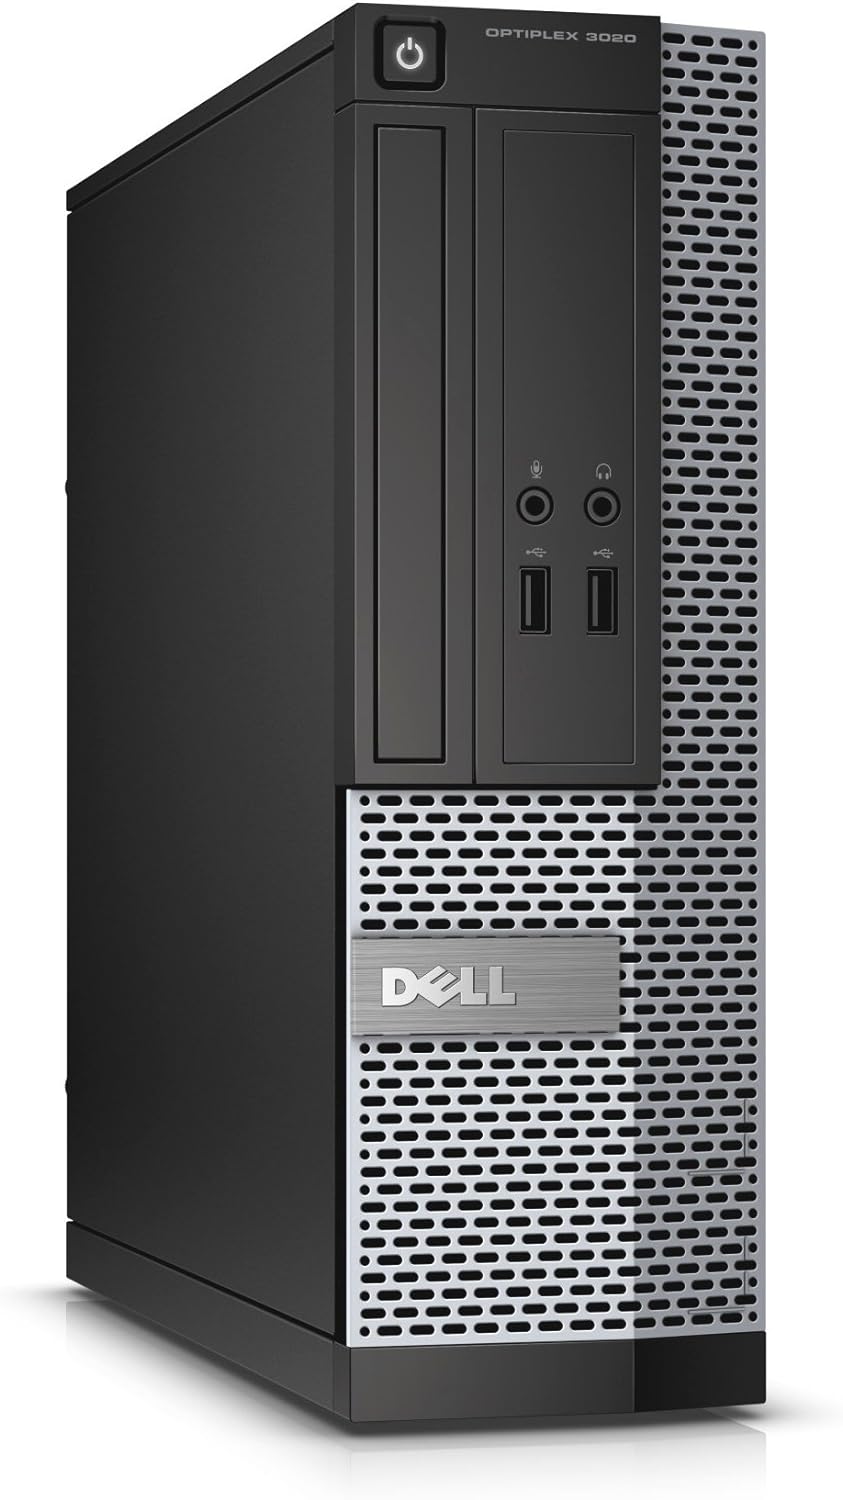 Dell Optiplex 3020 SFF Tower PC, Intel Core i3-4130, 500 GB HDD, 4 GB RAM, Intel HD Graphics, DOS - Black